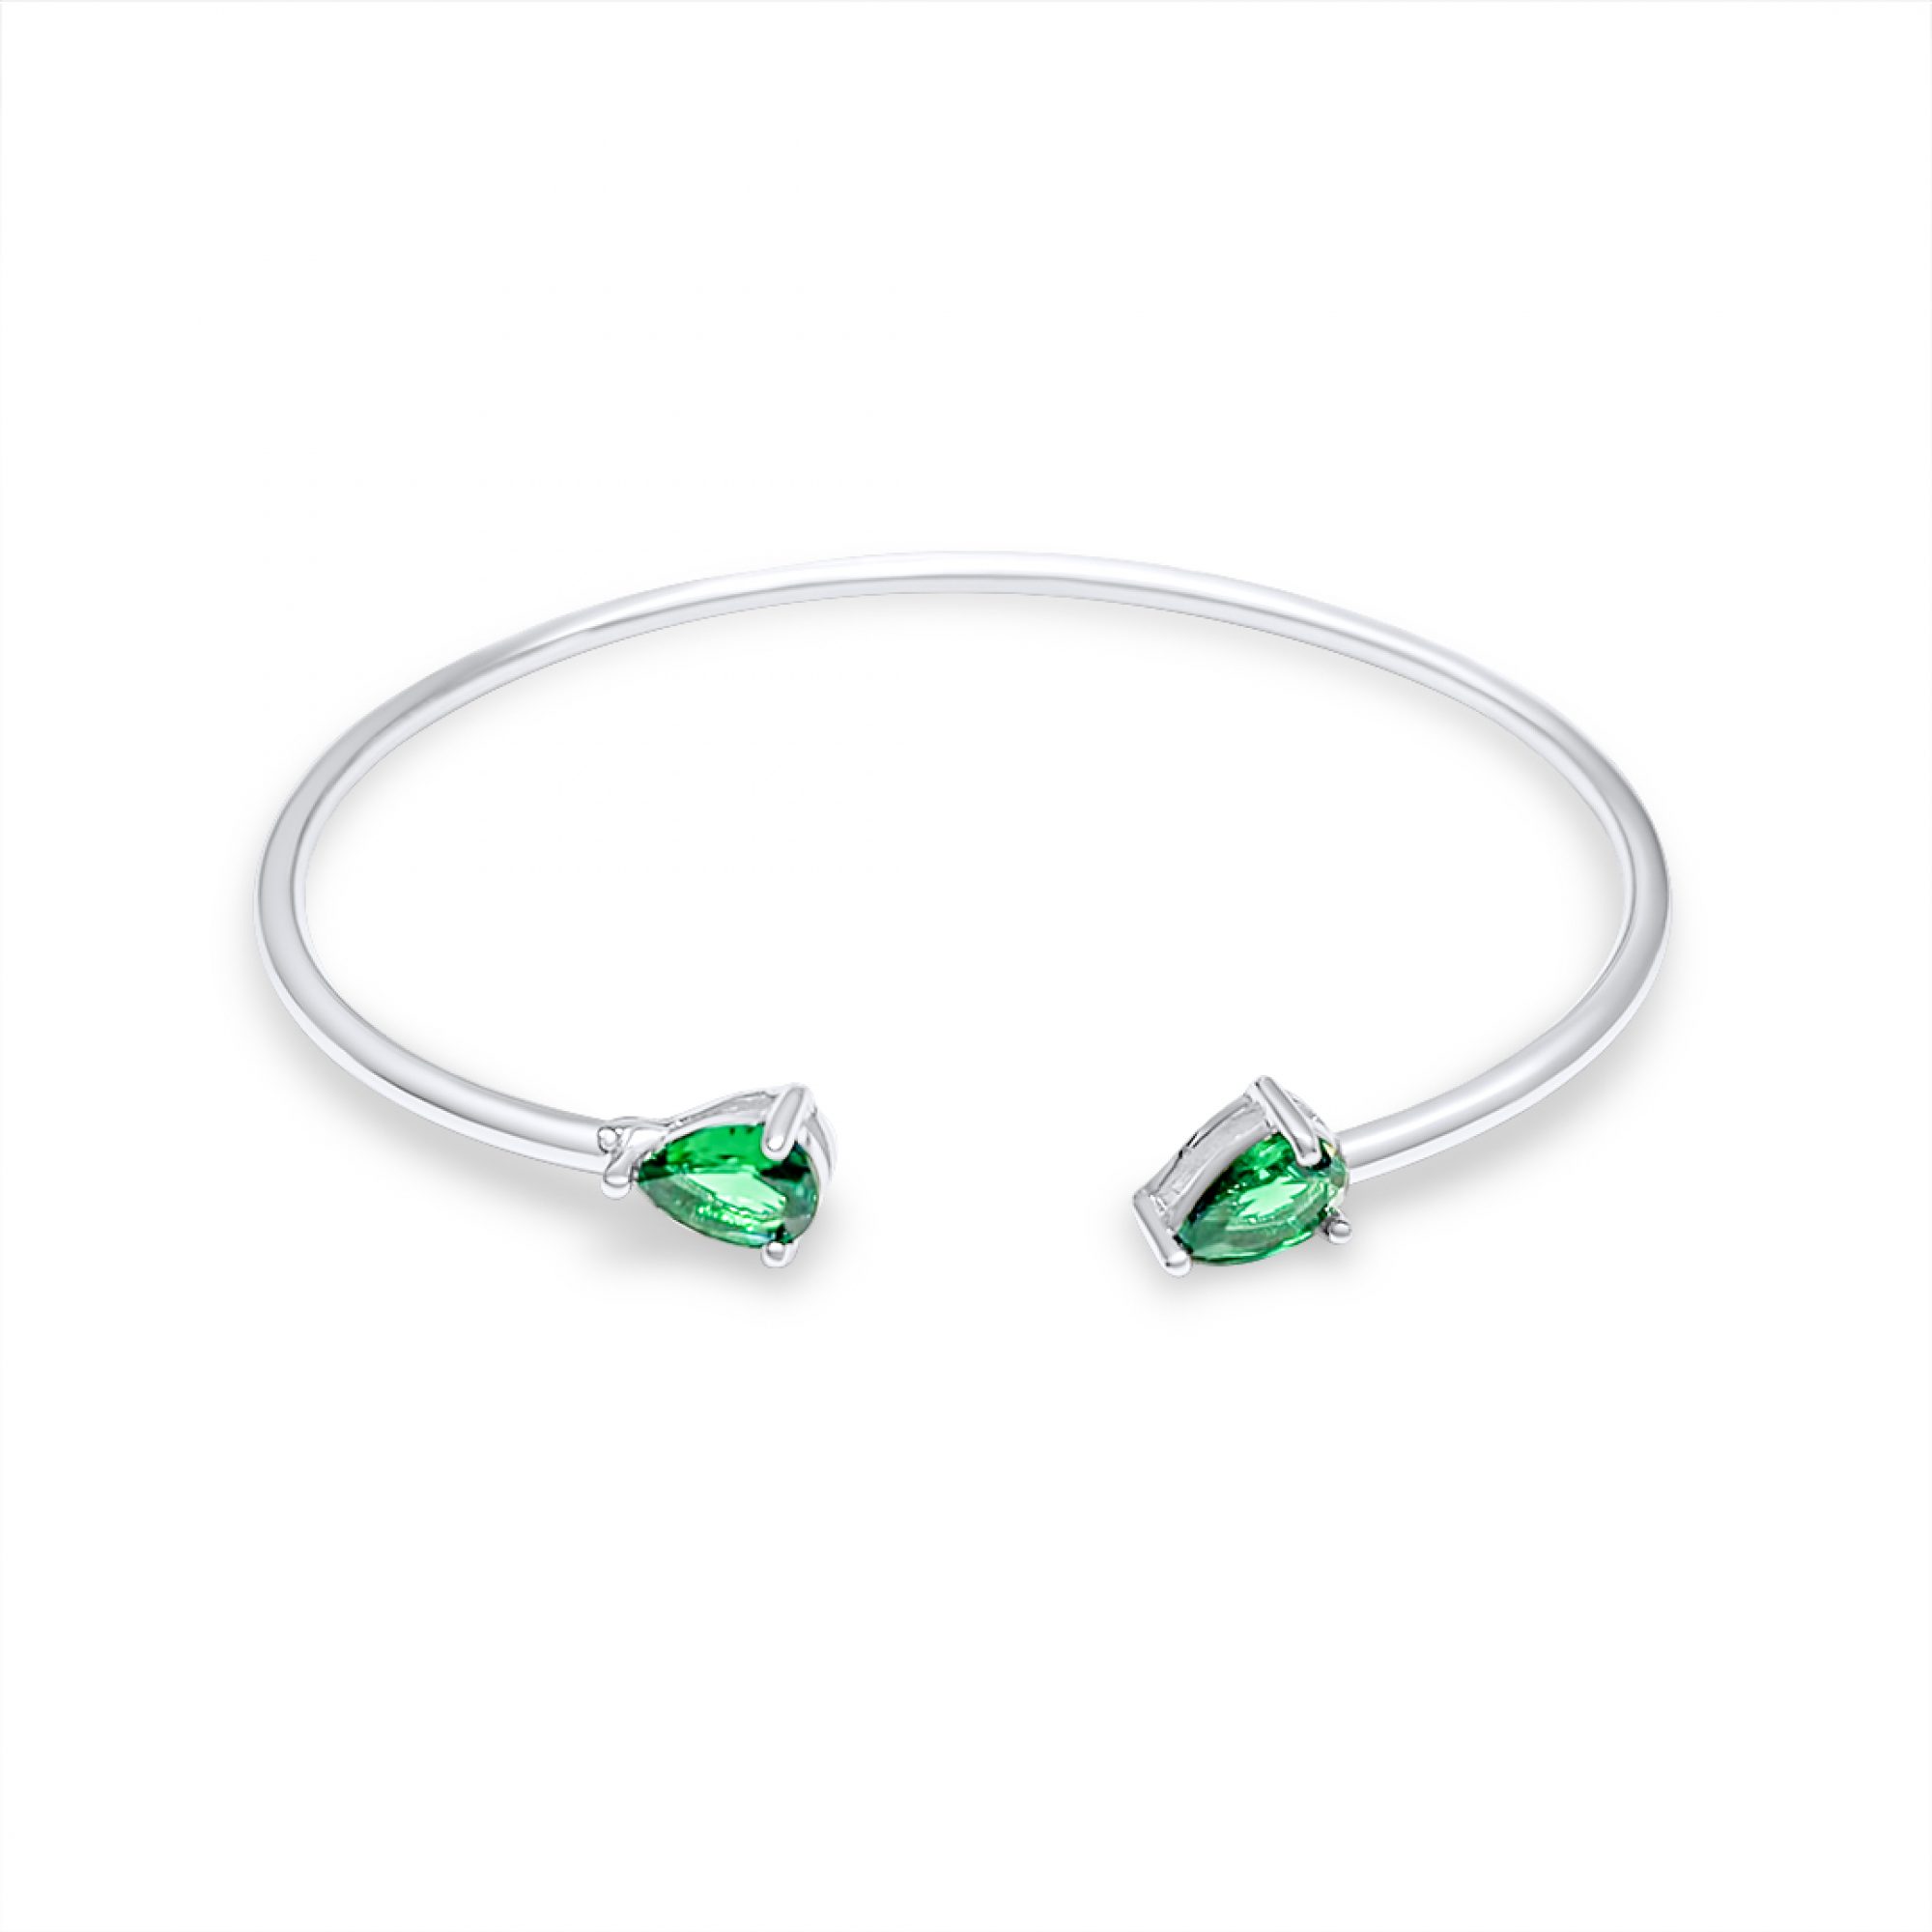 Adjustable bracelet with emerald stones